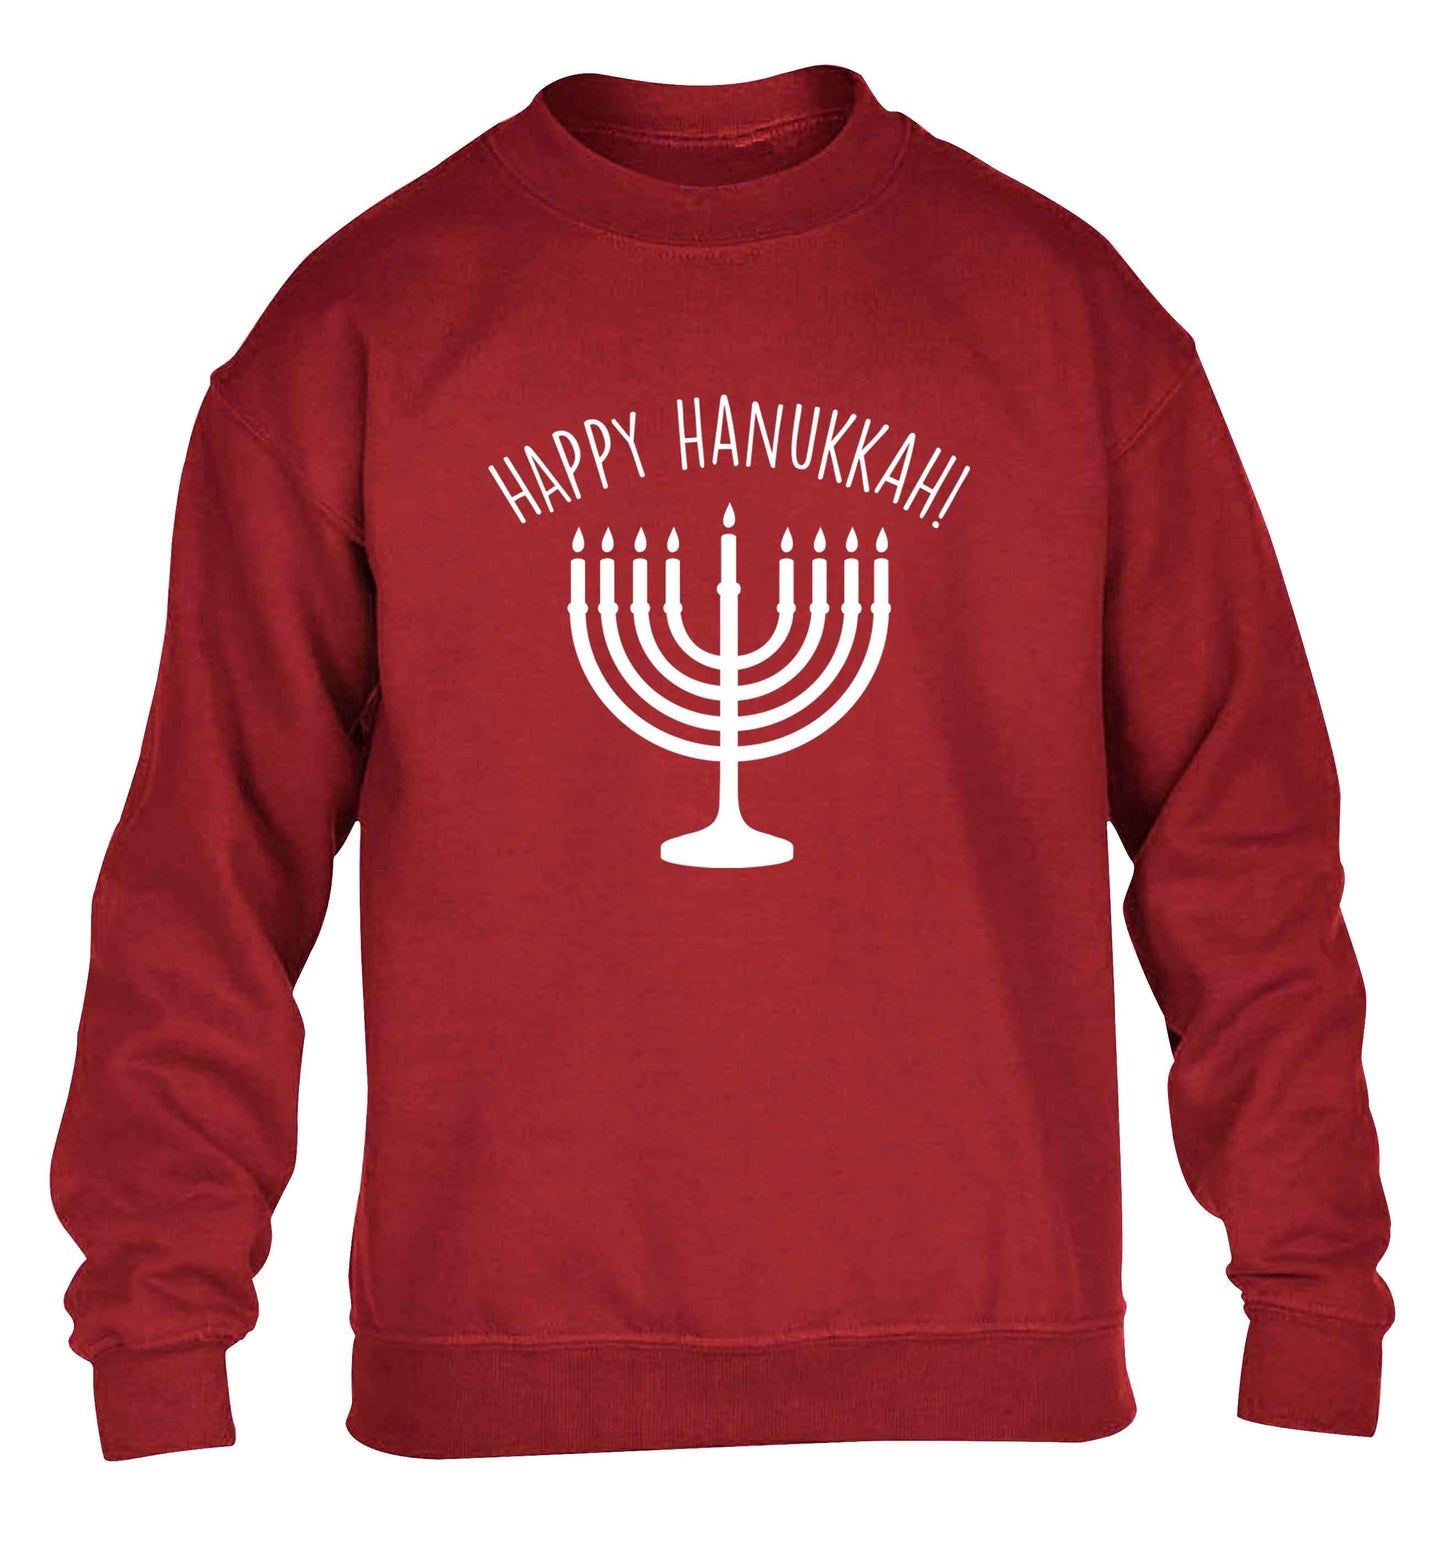 Happy hanukkah children's grey sweater 12-13 Years